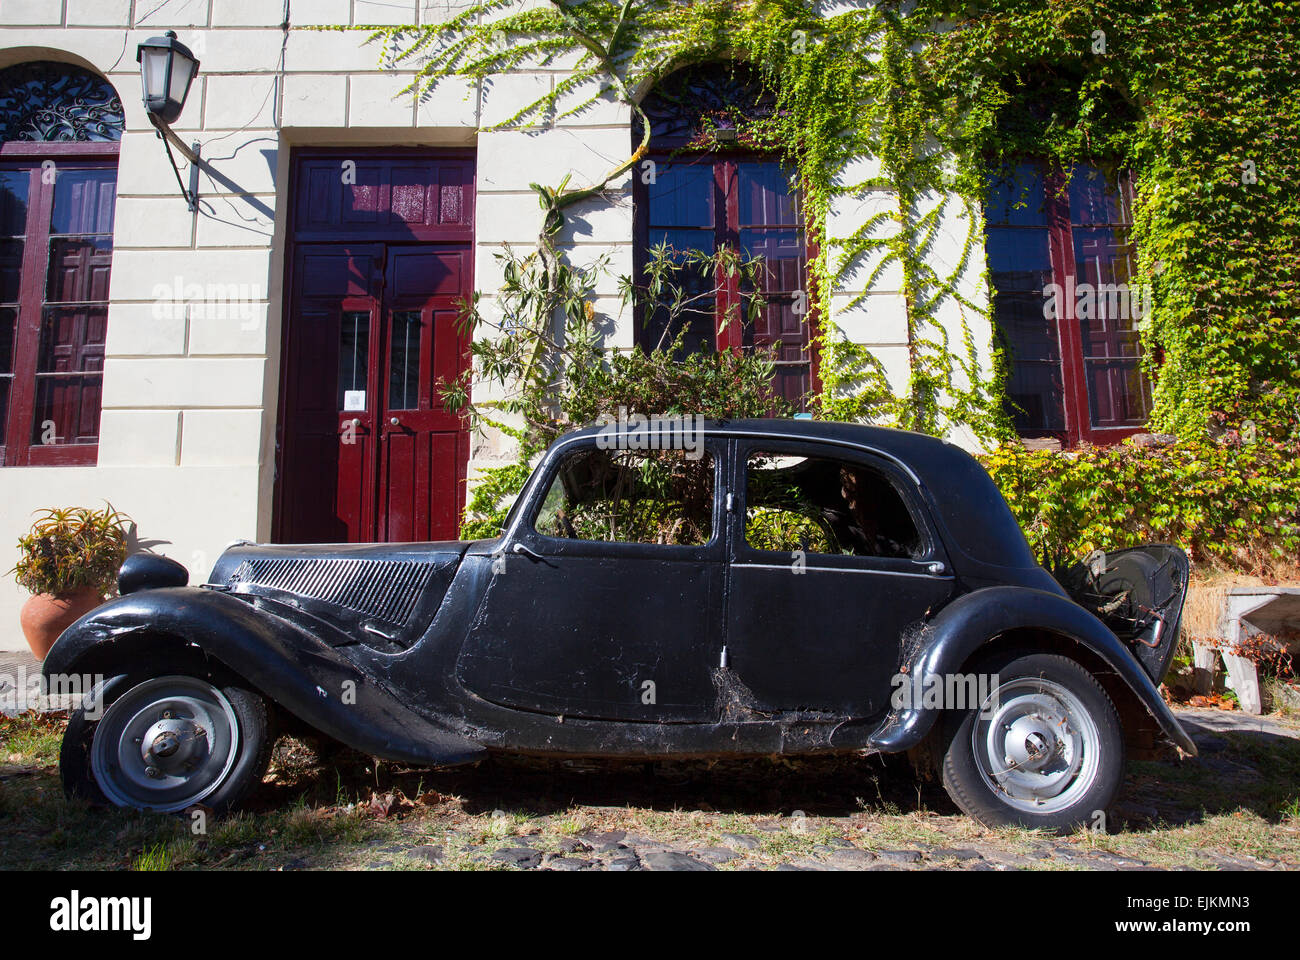 Vintage car in the historical neighborhood of Colonia del Sacramento, Uruguay. Stock Photo